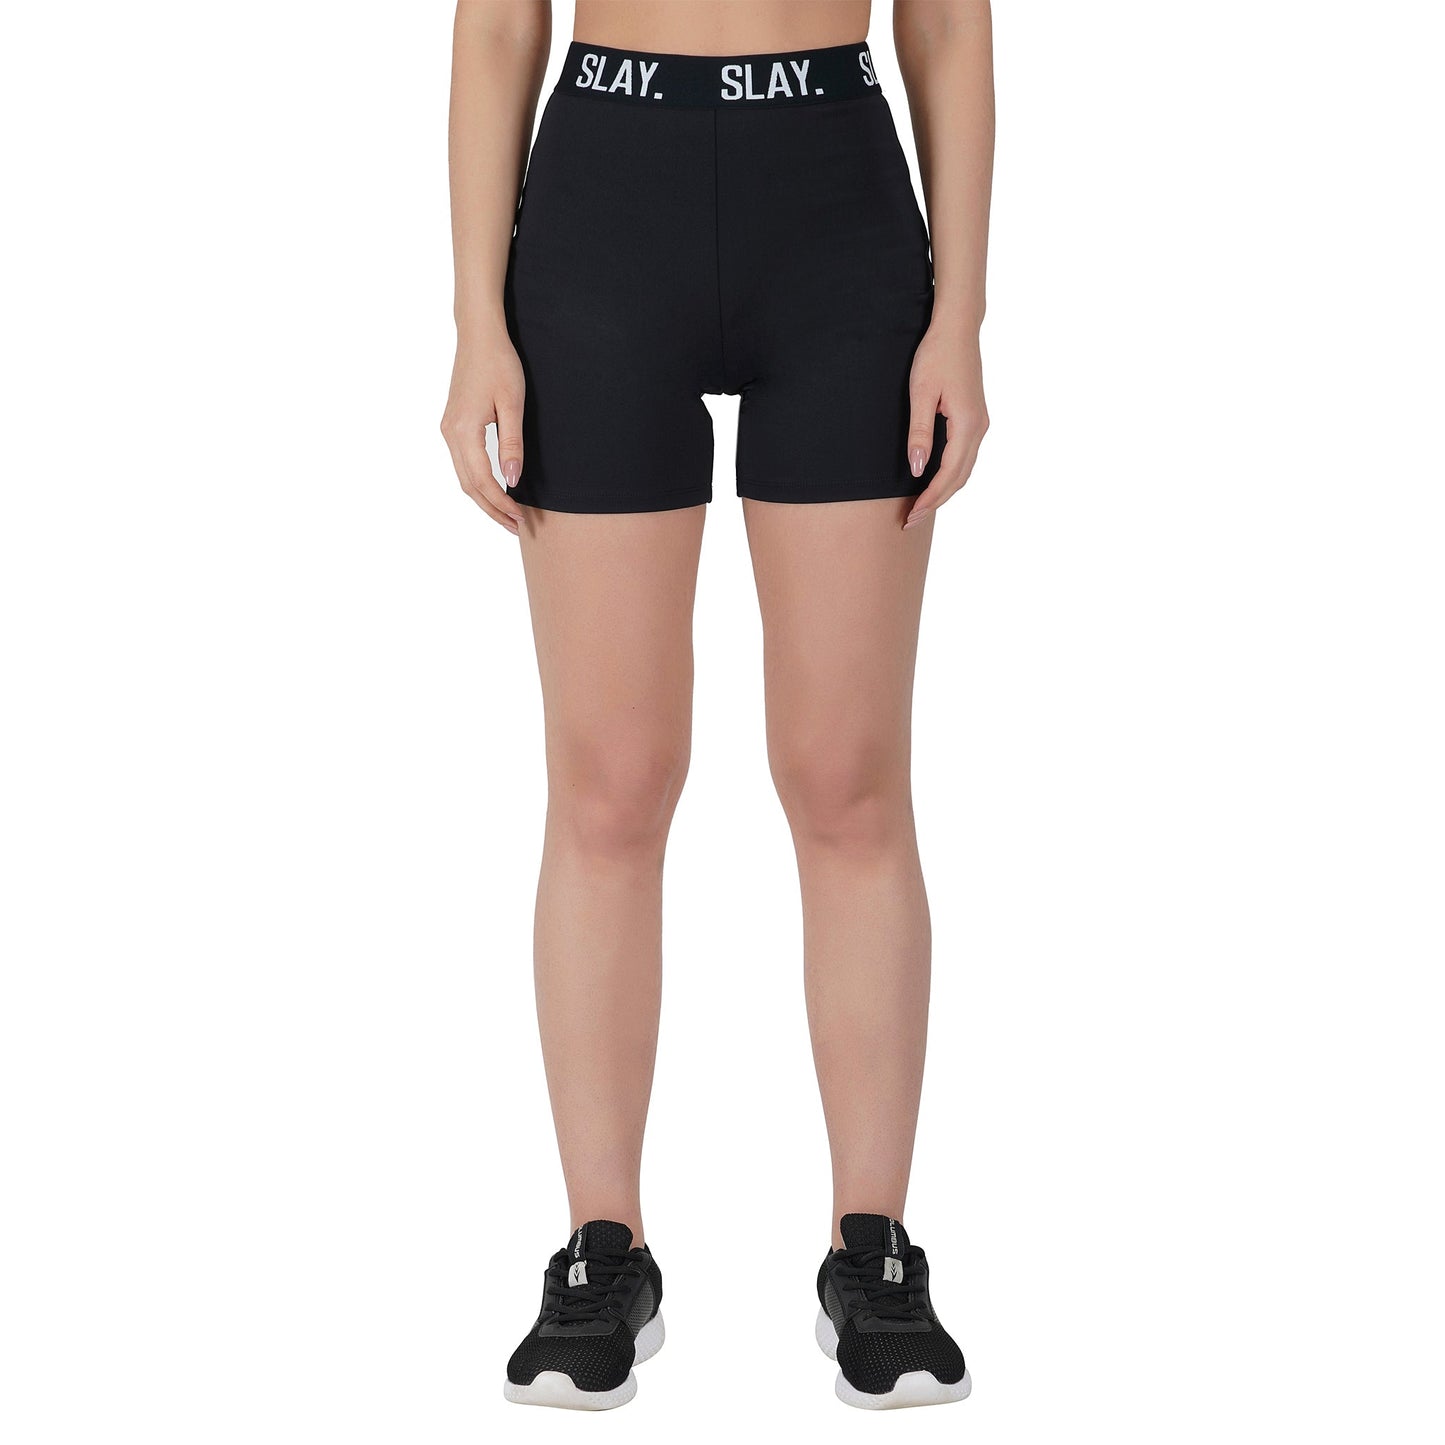 SLAY. Women's Activewear Black High Waist Shorts